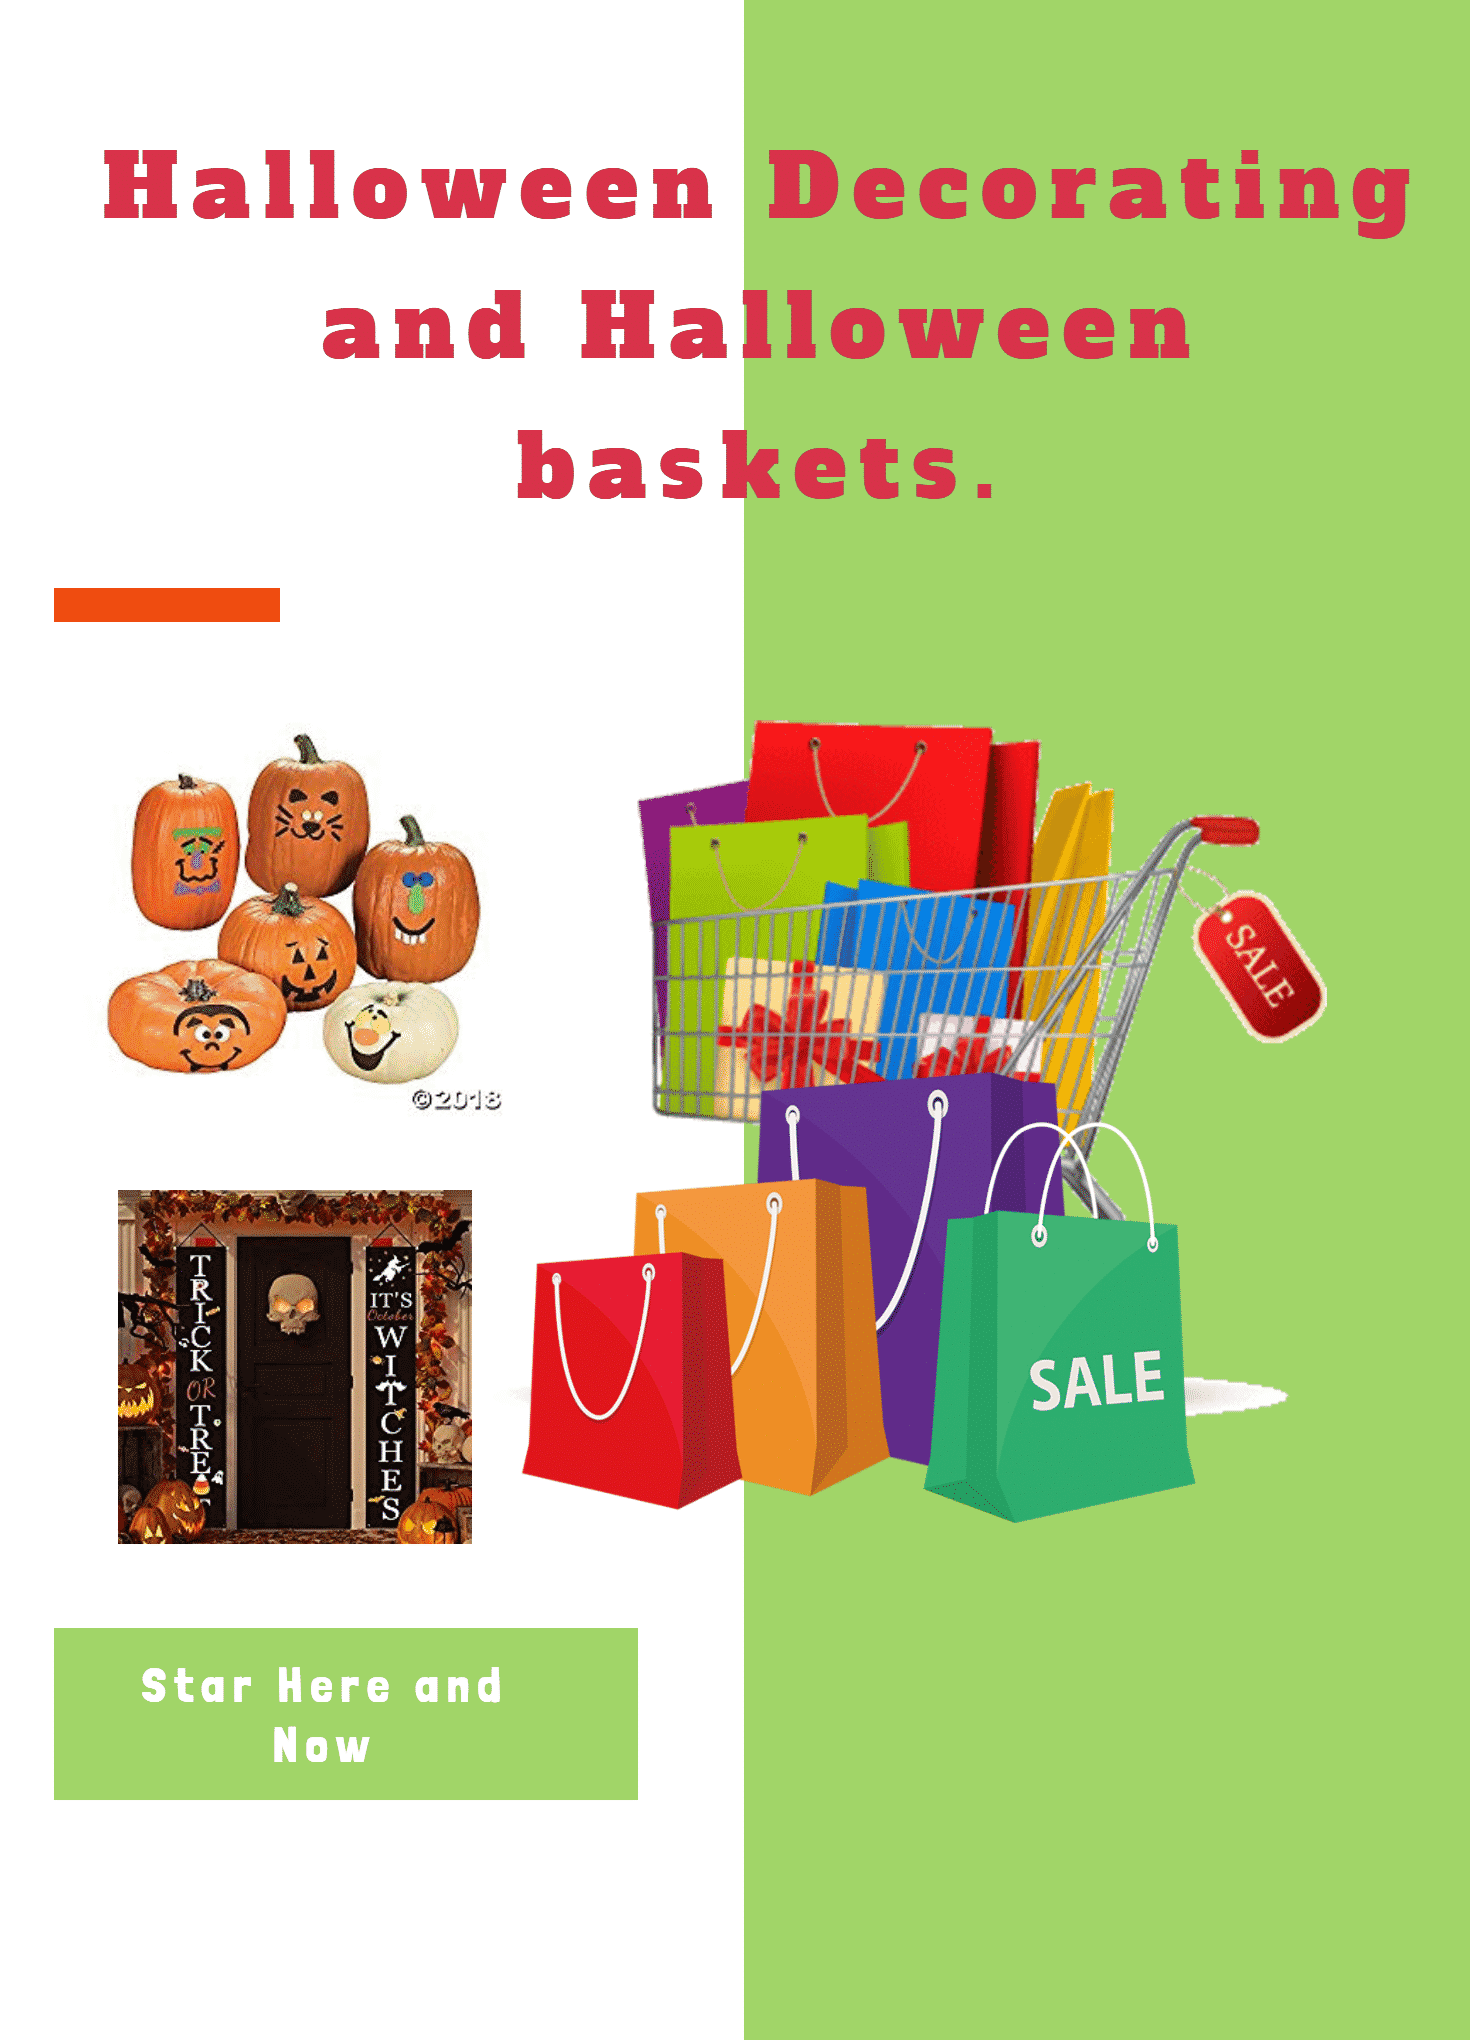 Halloween decorating and Halloween baskets.